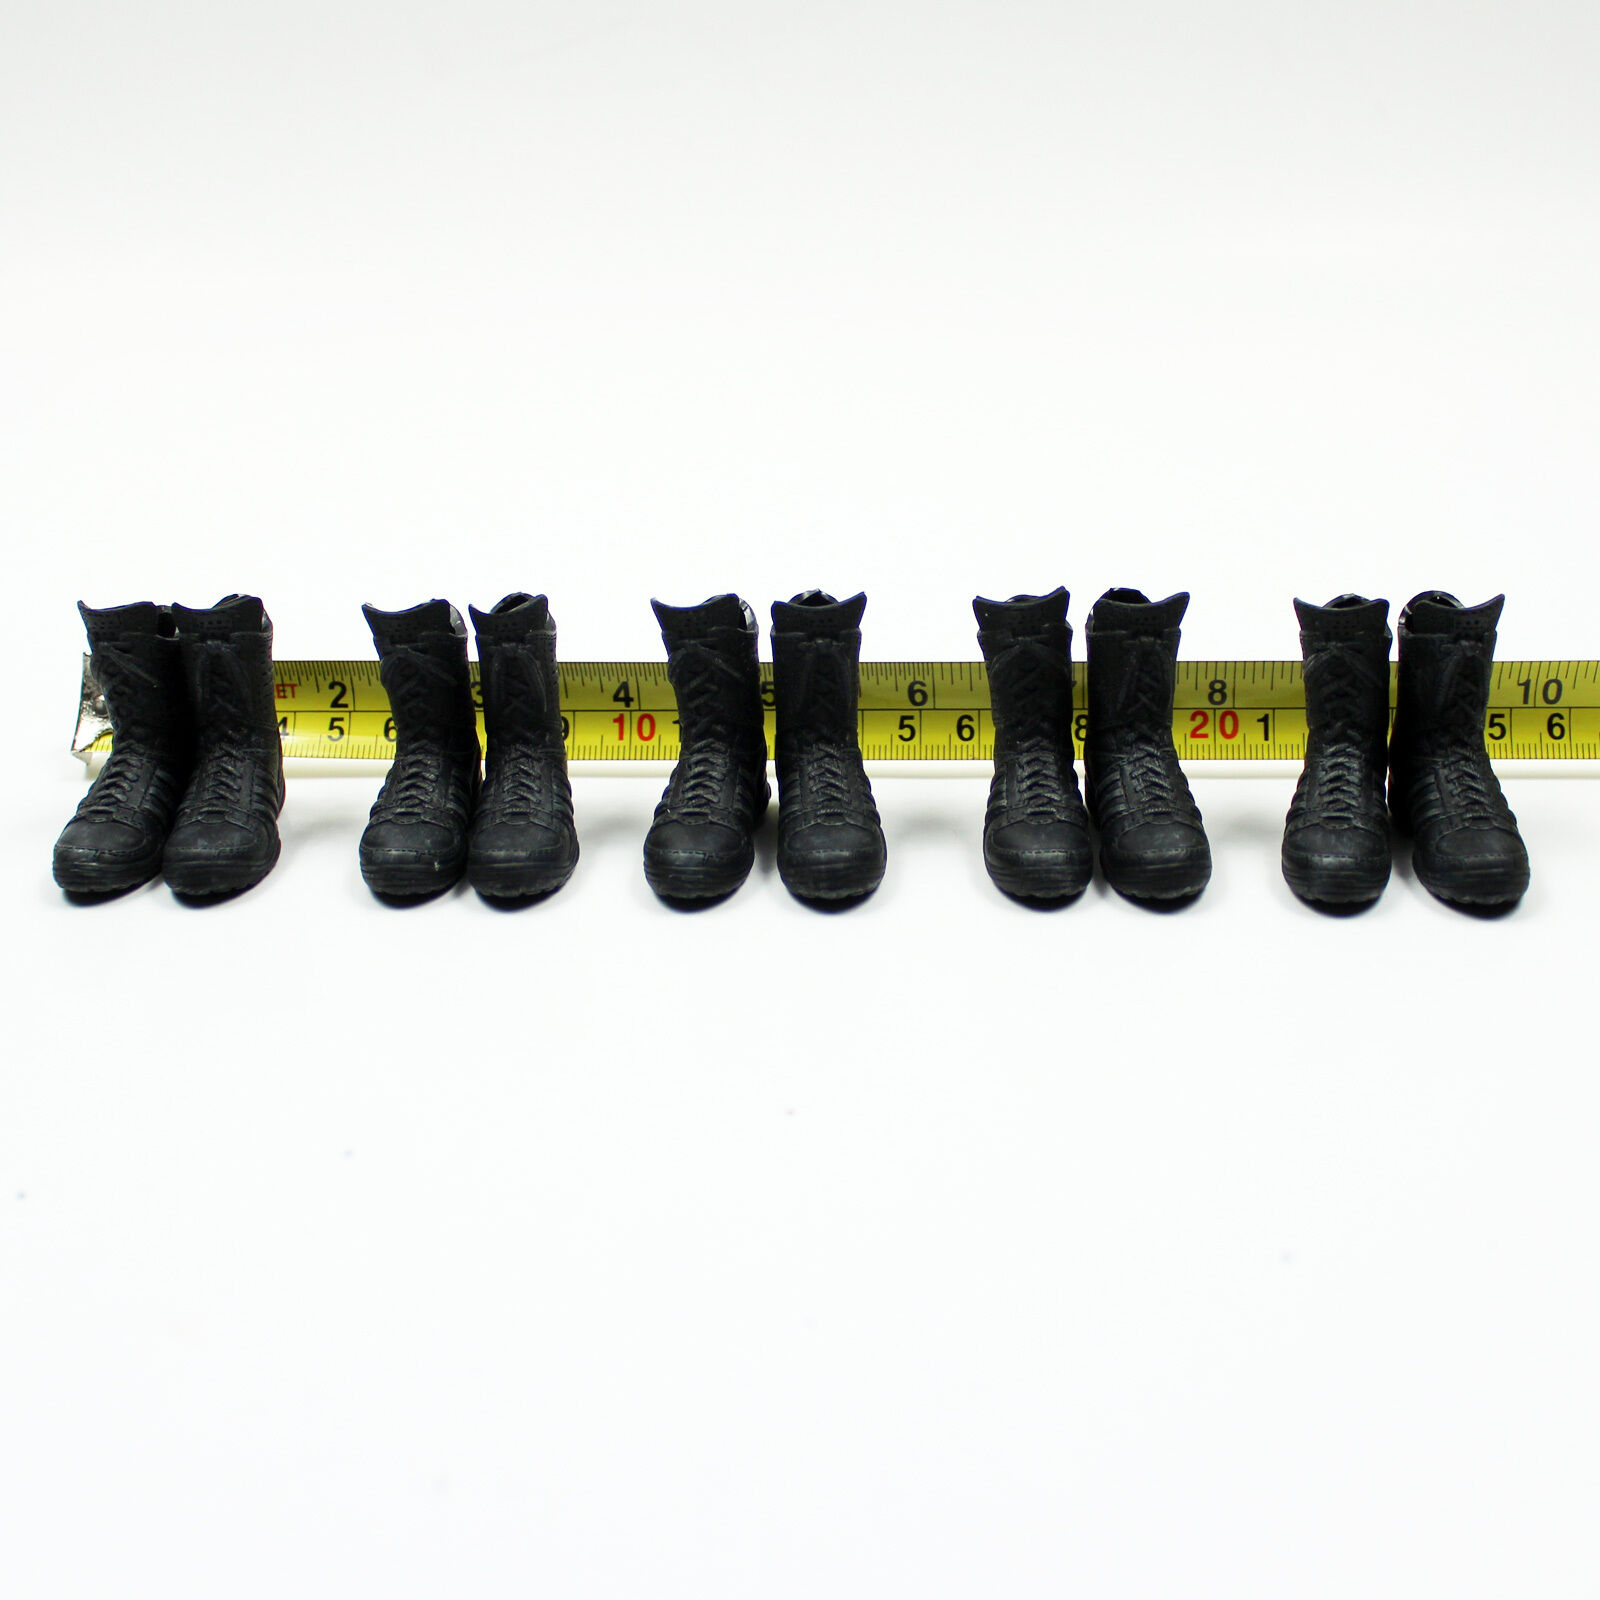 TD73-17A 1/6 Scale HOT Female Black Boots TOYS 5pcs